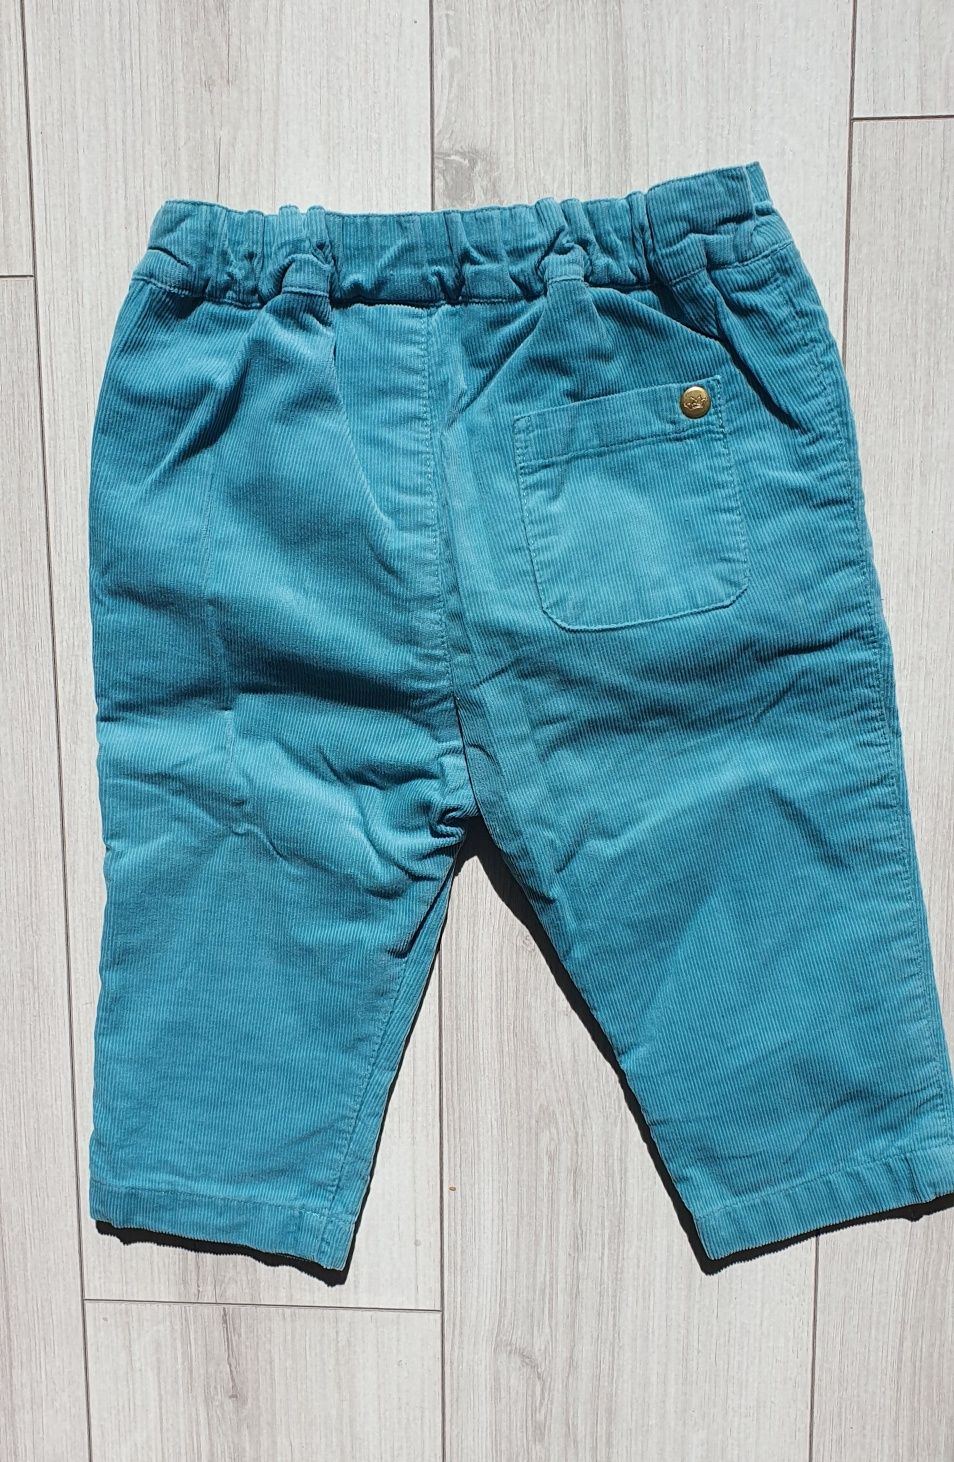 Pantaloni Marks and Spencer, 6-9 luni, 74 cm